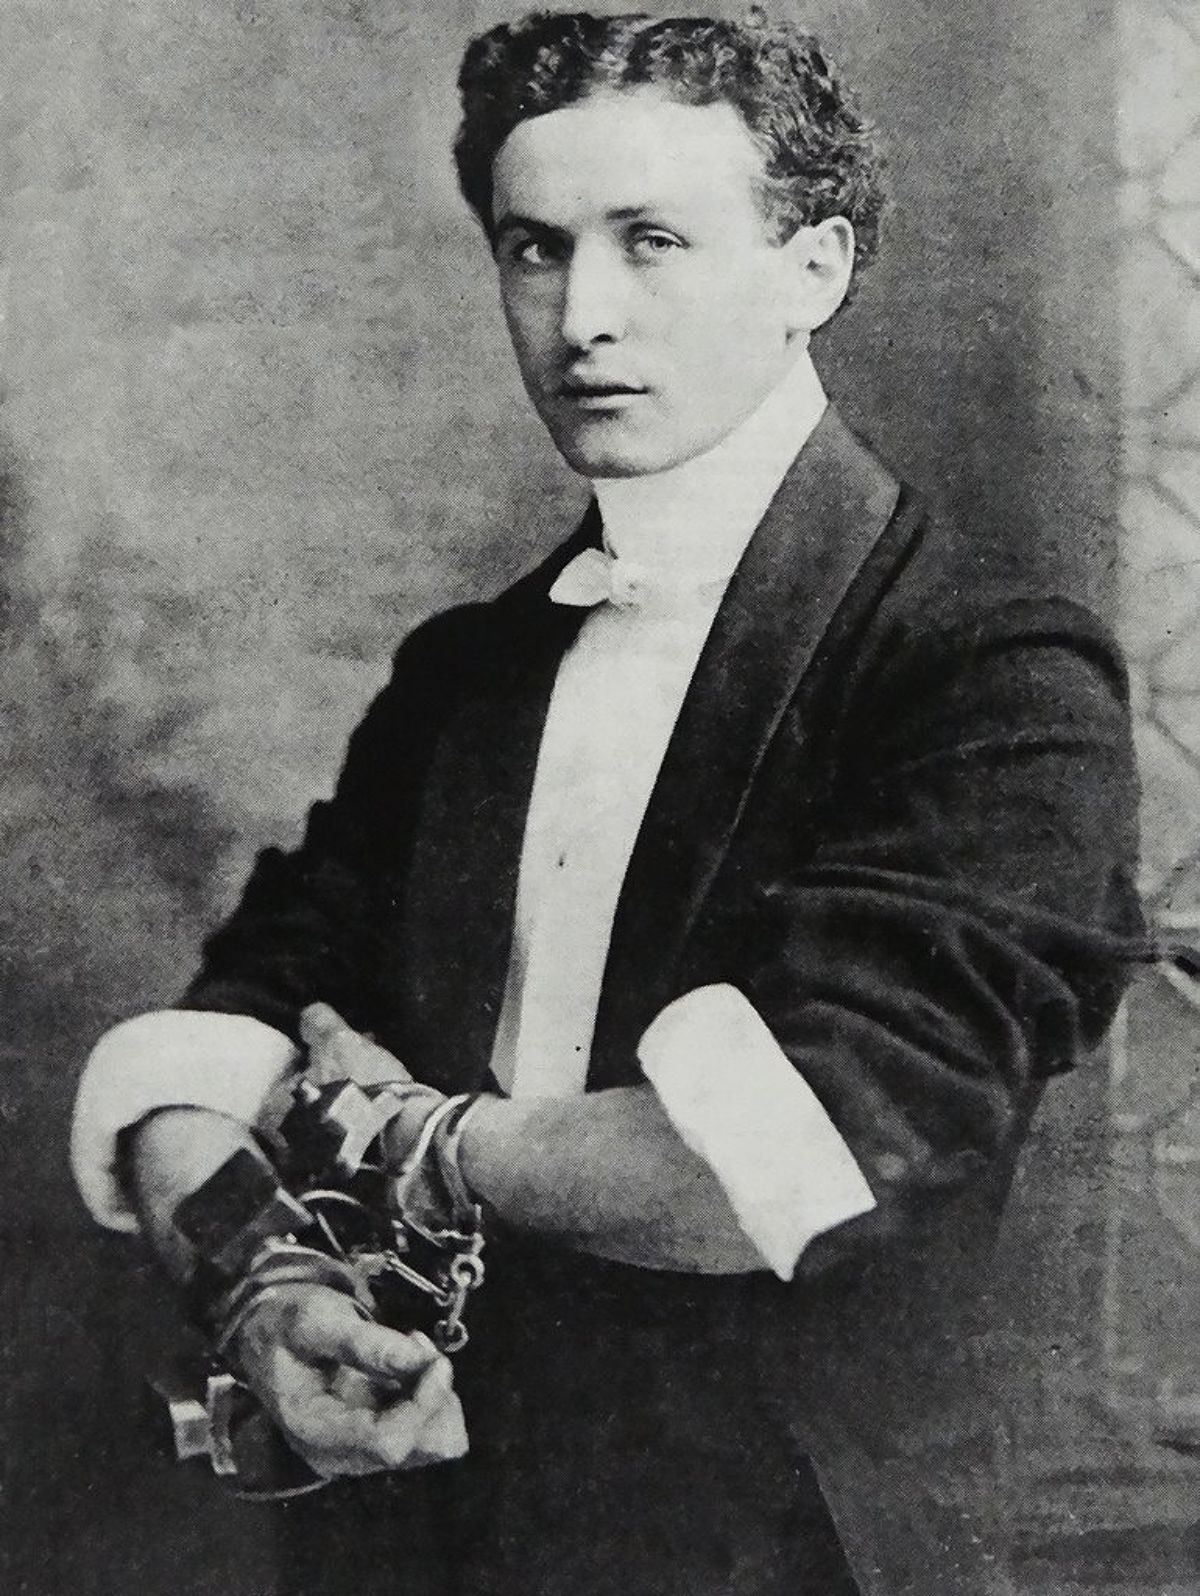 The illusionist Harry Houdini